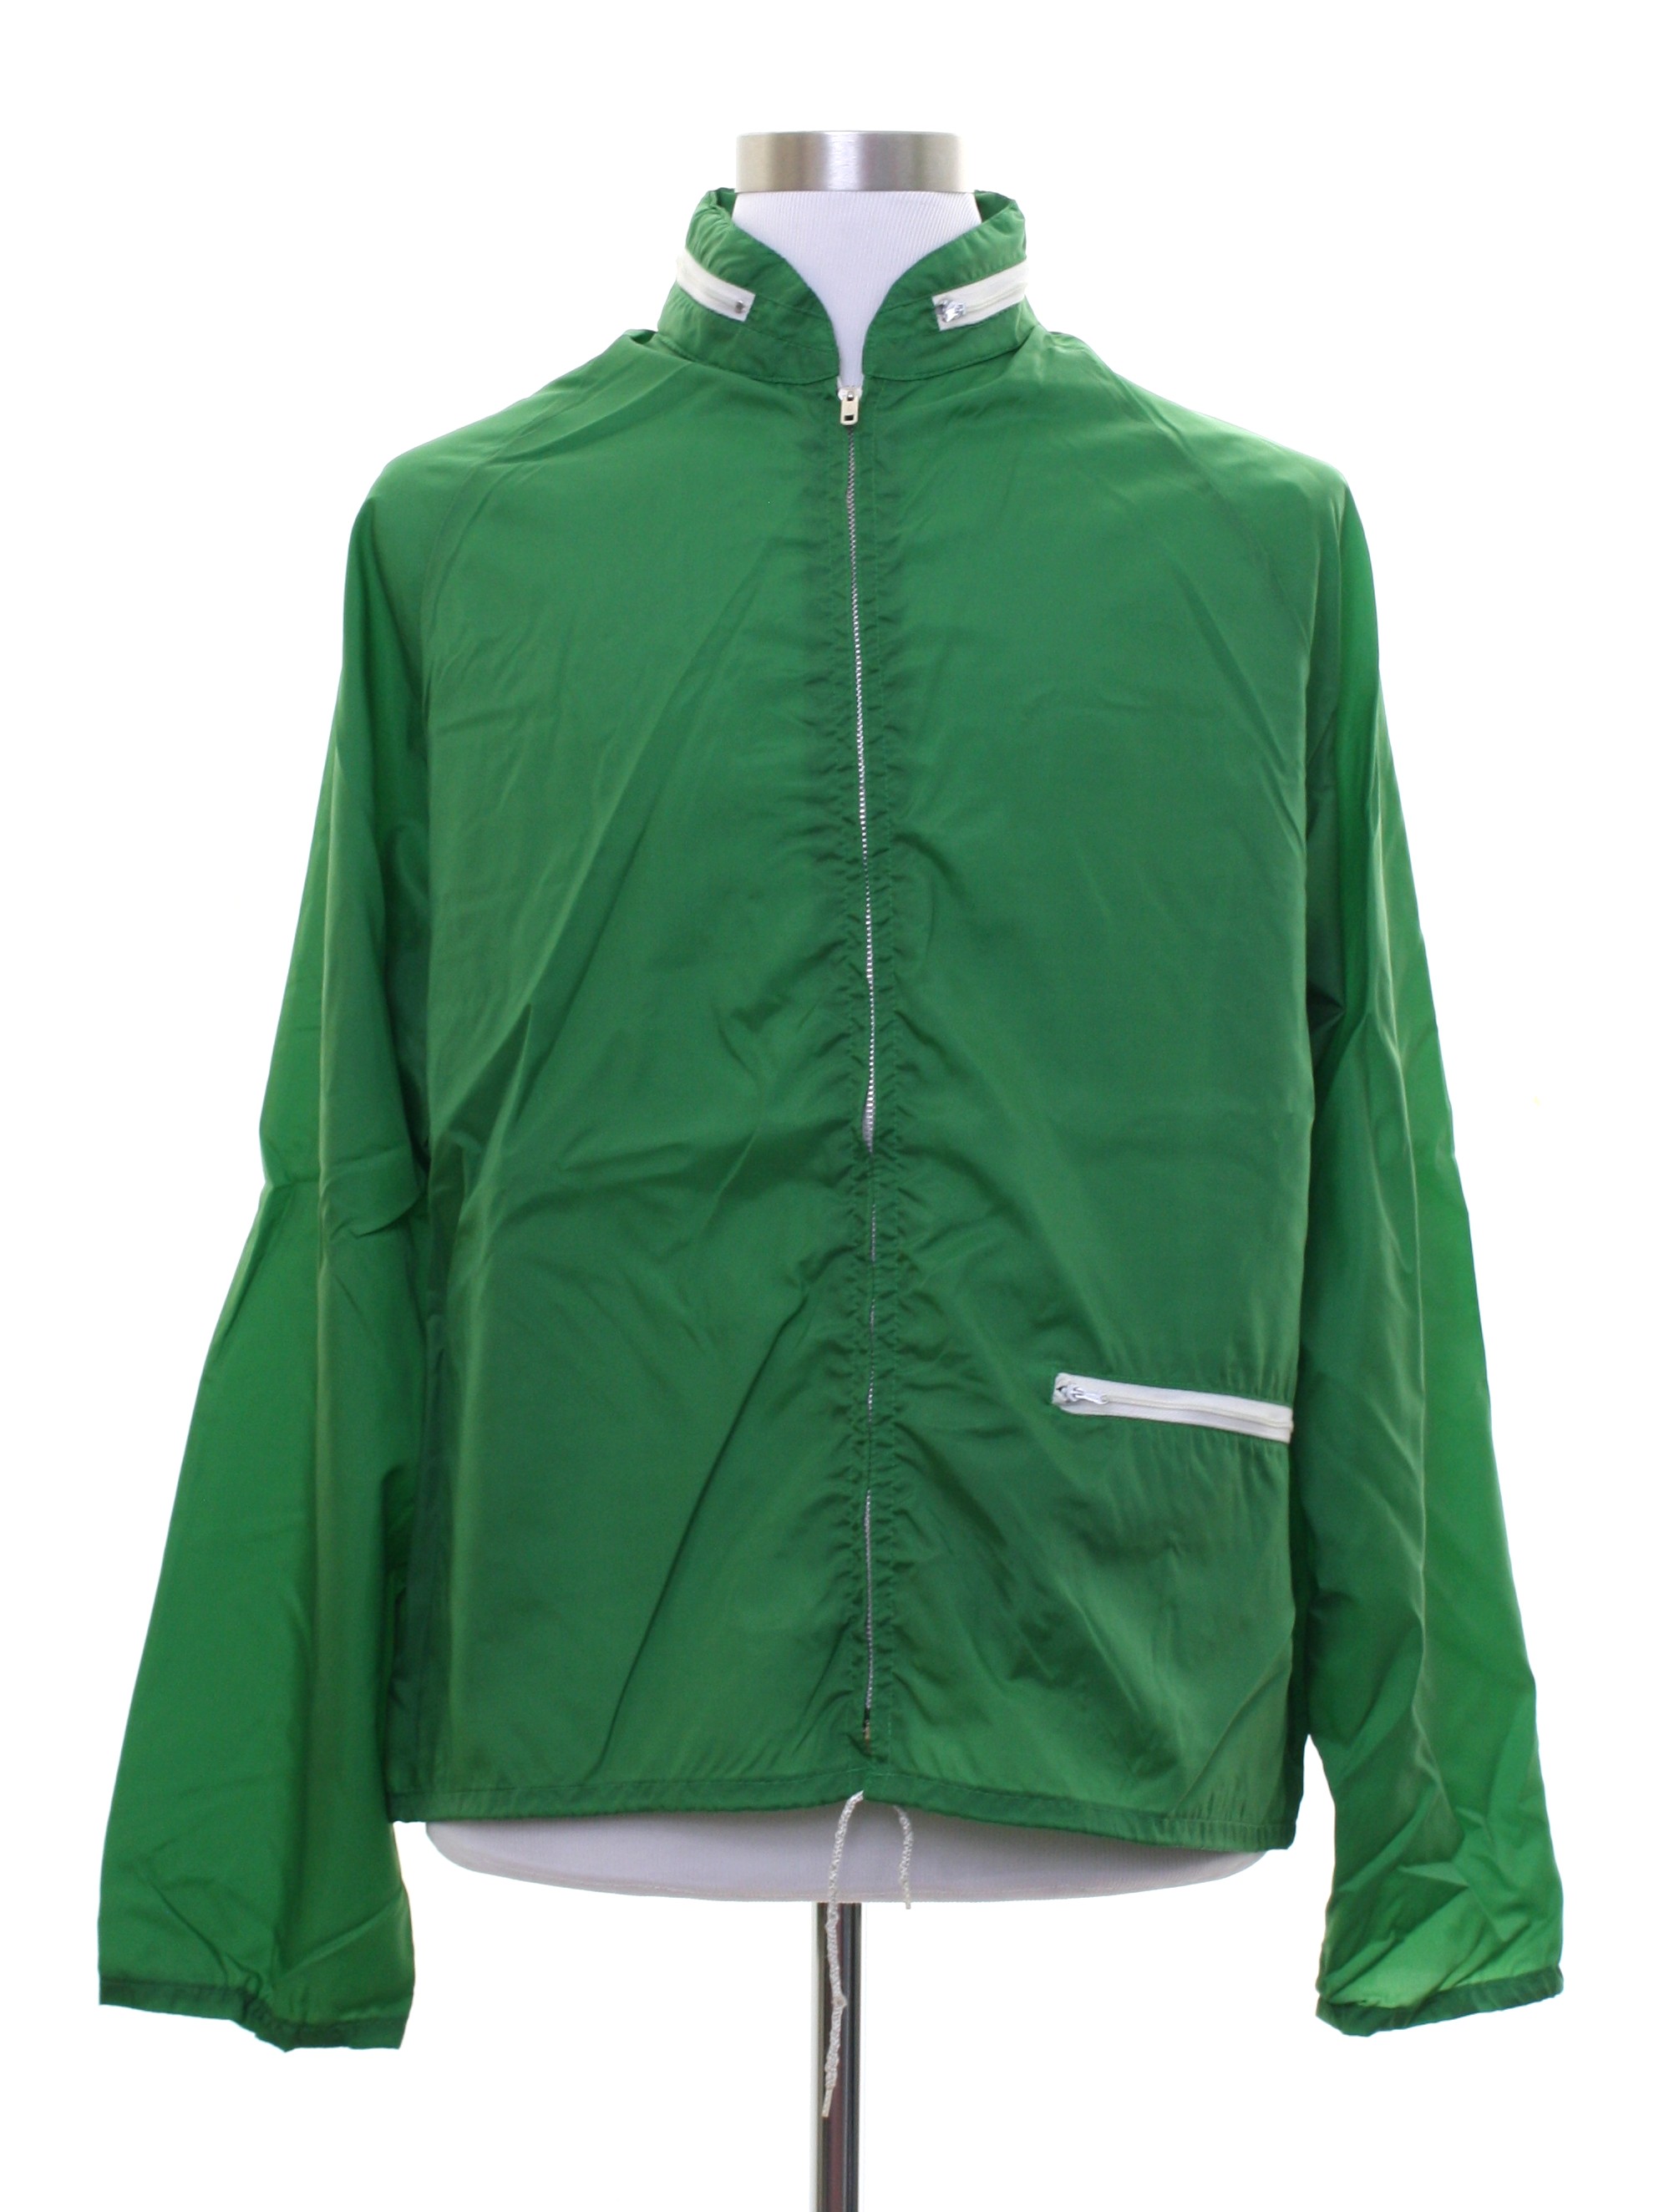 Retro 1960's Jacket (Adventura) : 60s -Adventura- Unisex grass green ...